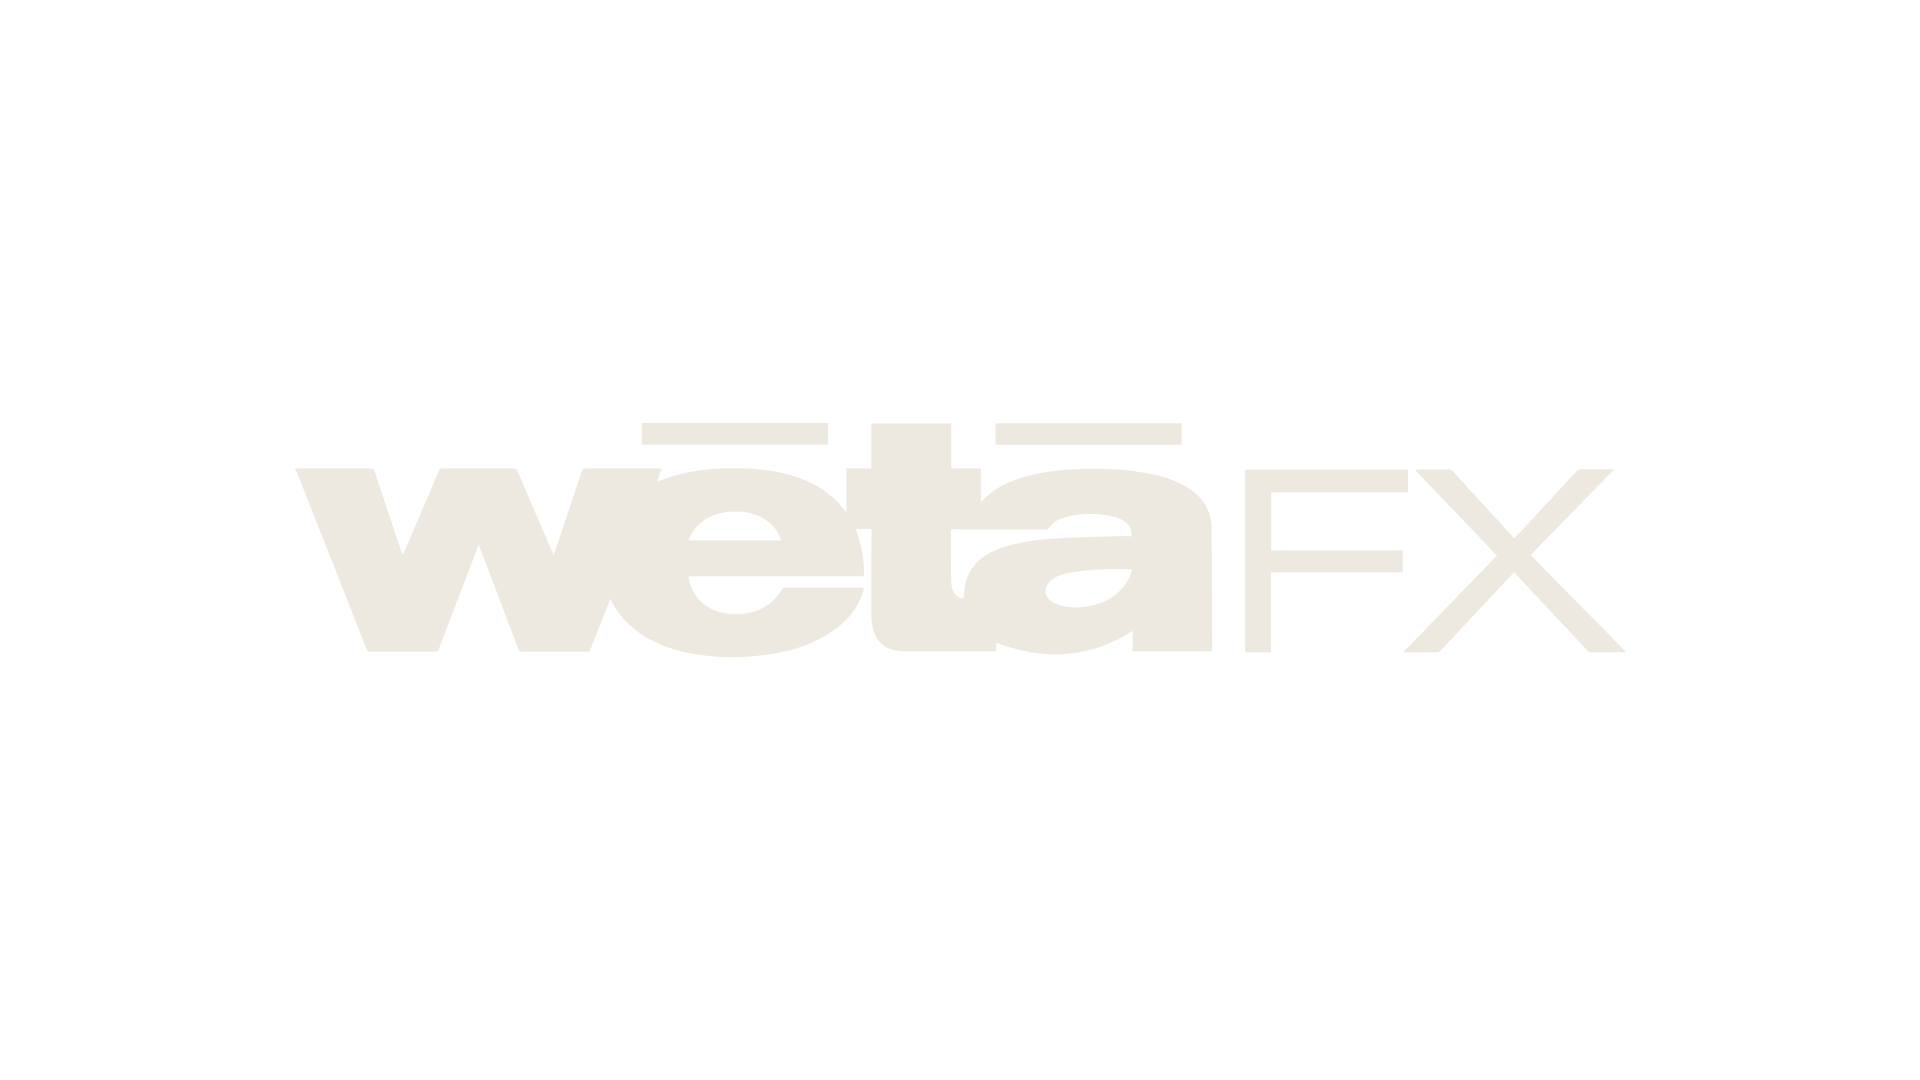 Wētā FX logo